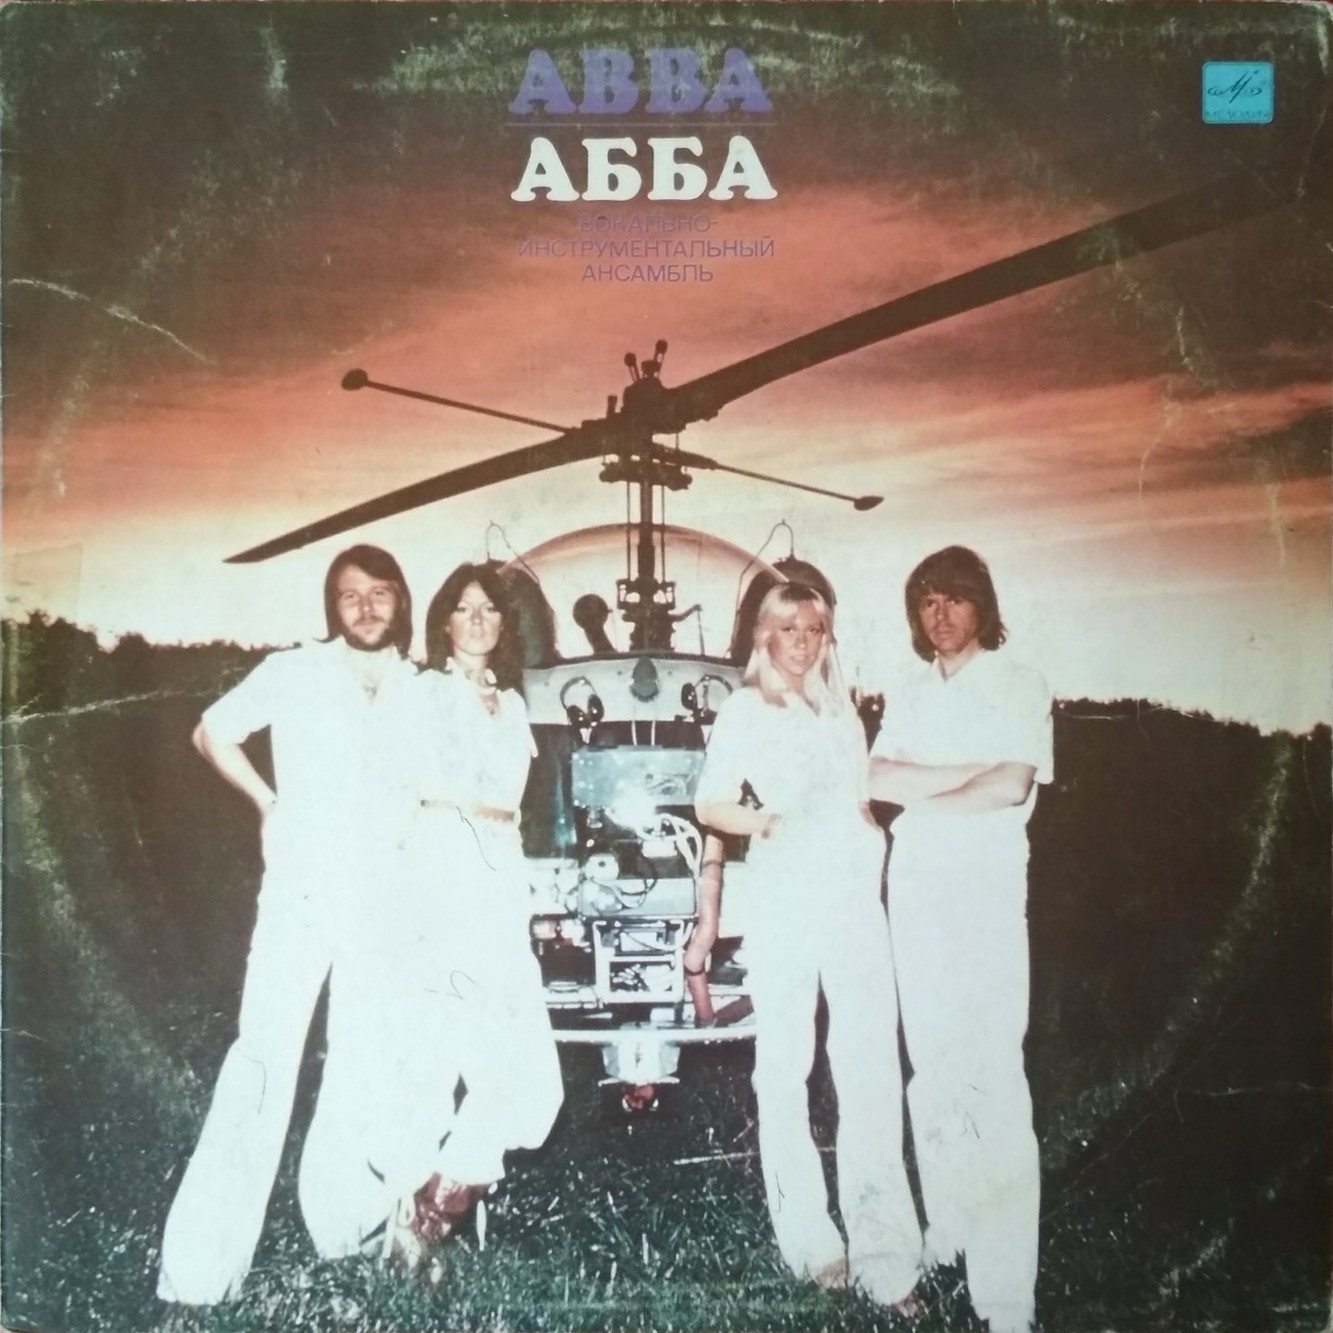 ВИА "АББА" (ABBA "Arrival")